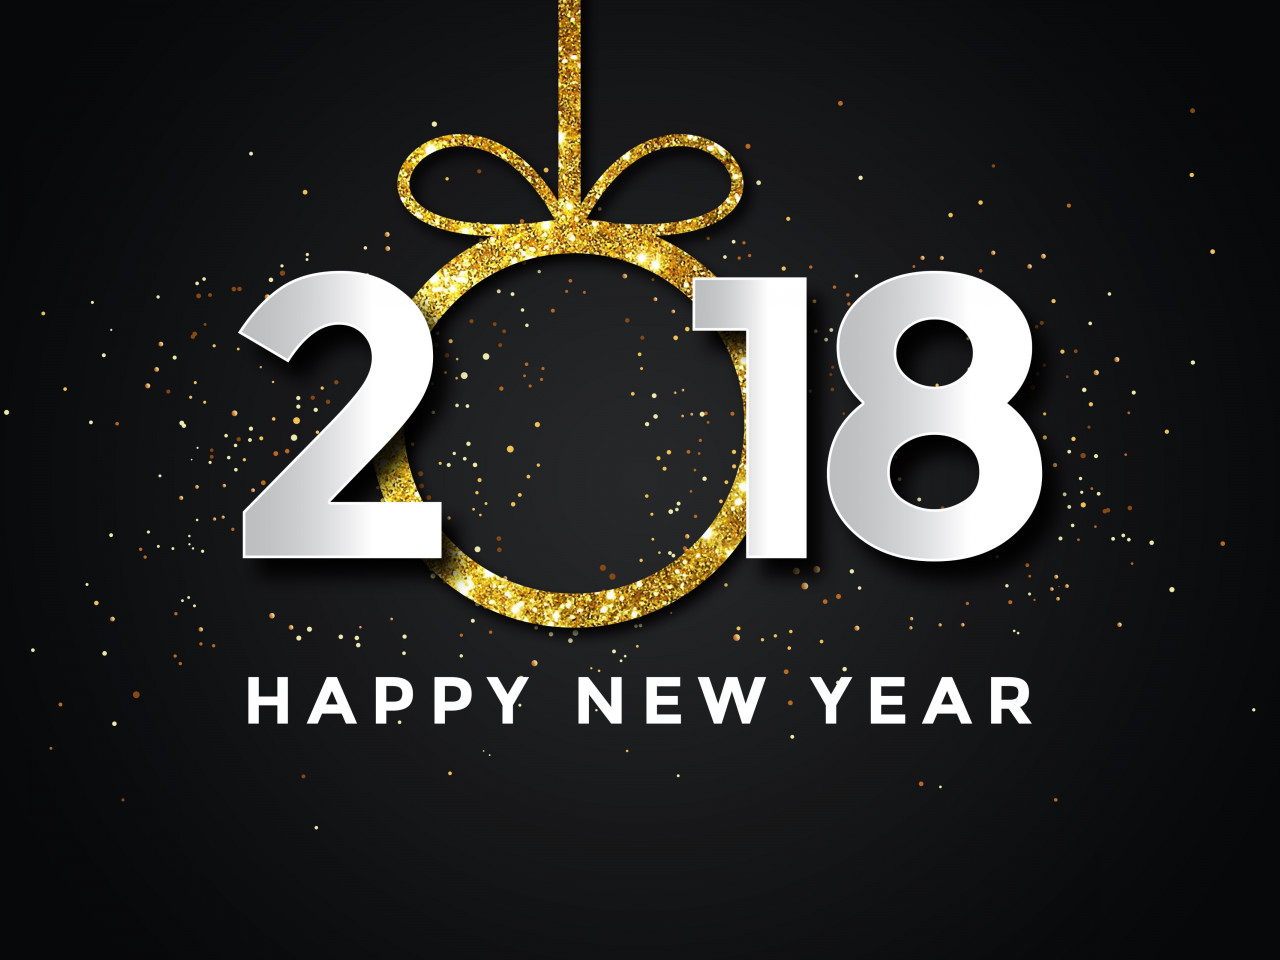 Happy New Year 2018 wallpaper 1280x960